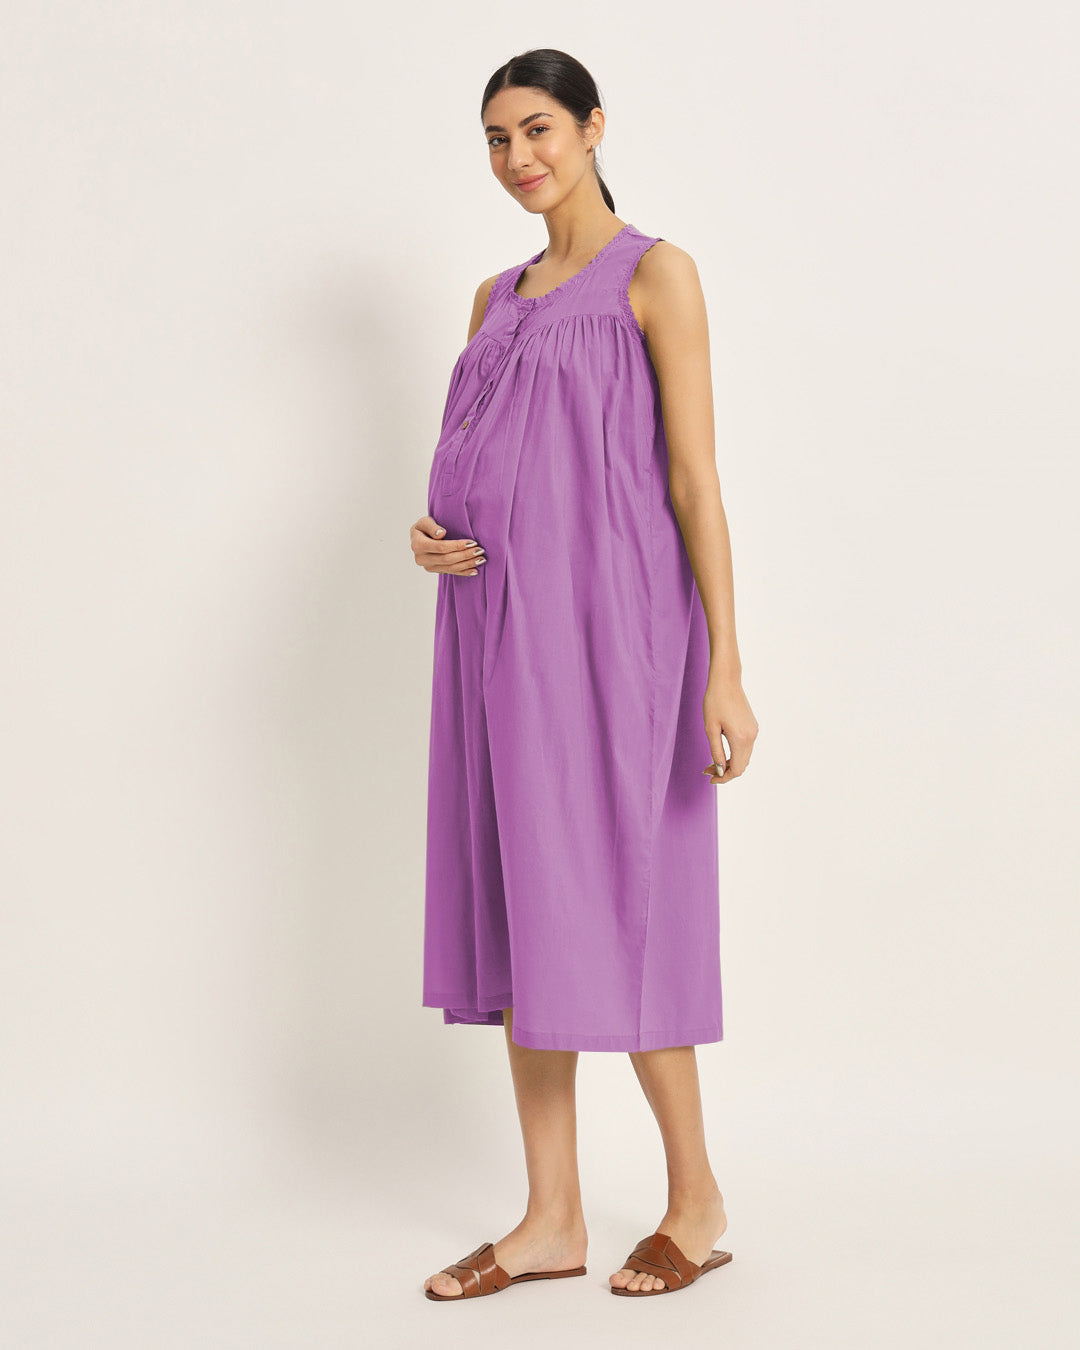 Combo: Sage Green & Wisteria Purple Pregnan-Queen Maternity & Nursing Dress